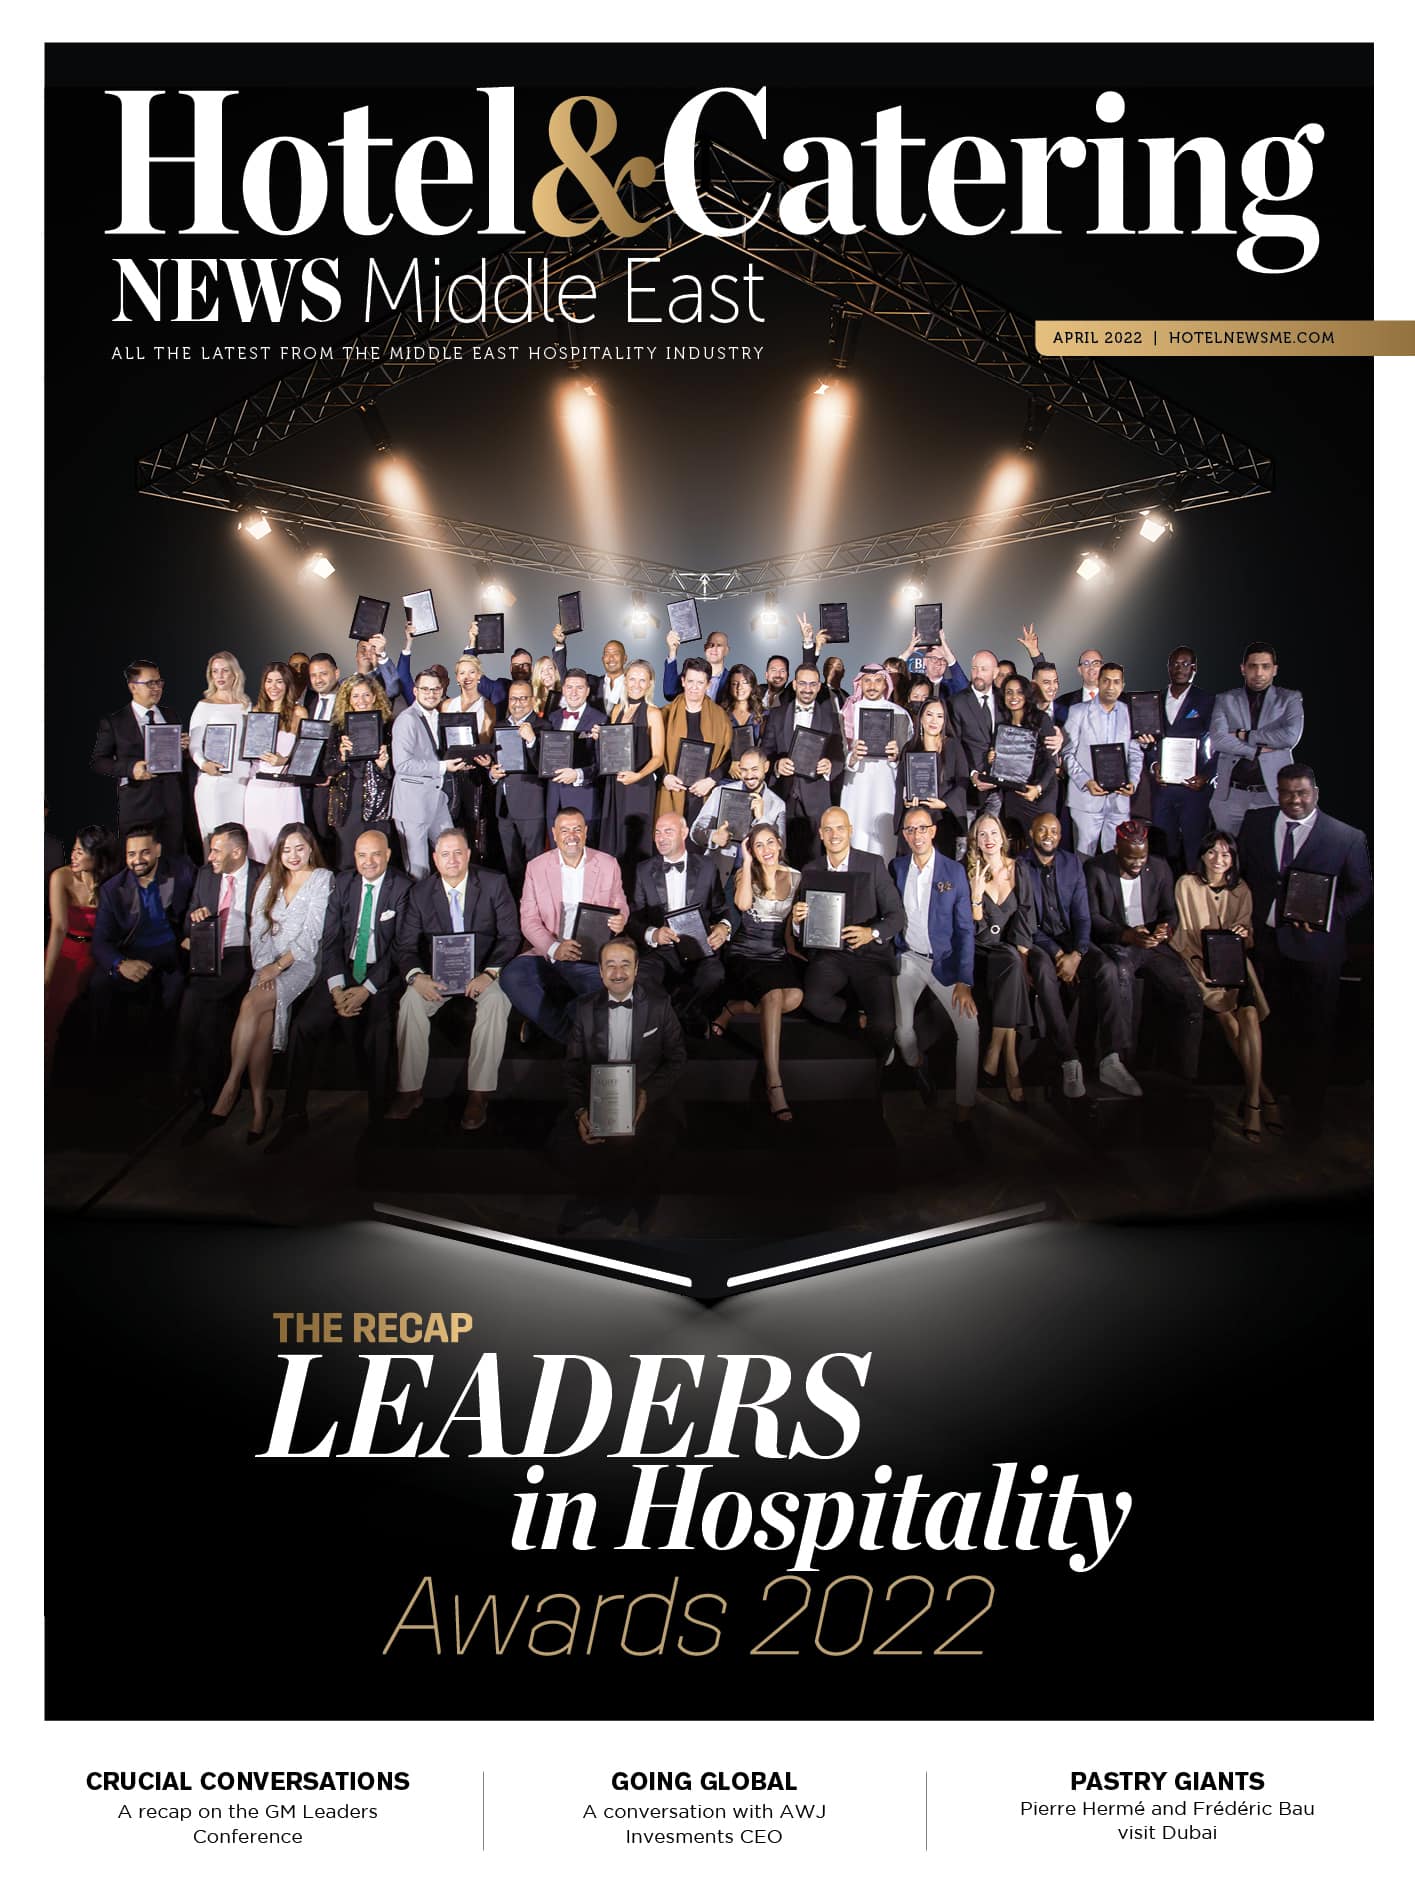 https://www.hotelnewsme.com/digital-magazine/hotel-catering-news-middle-east-april-2022-issue/